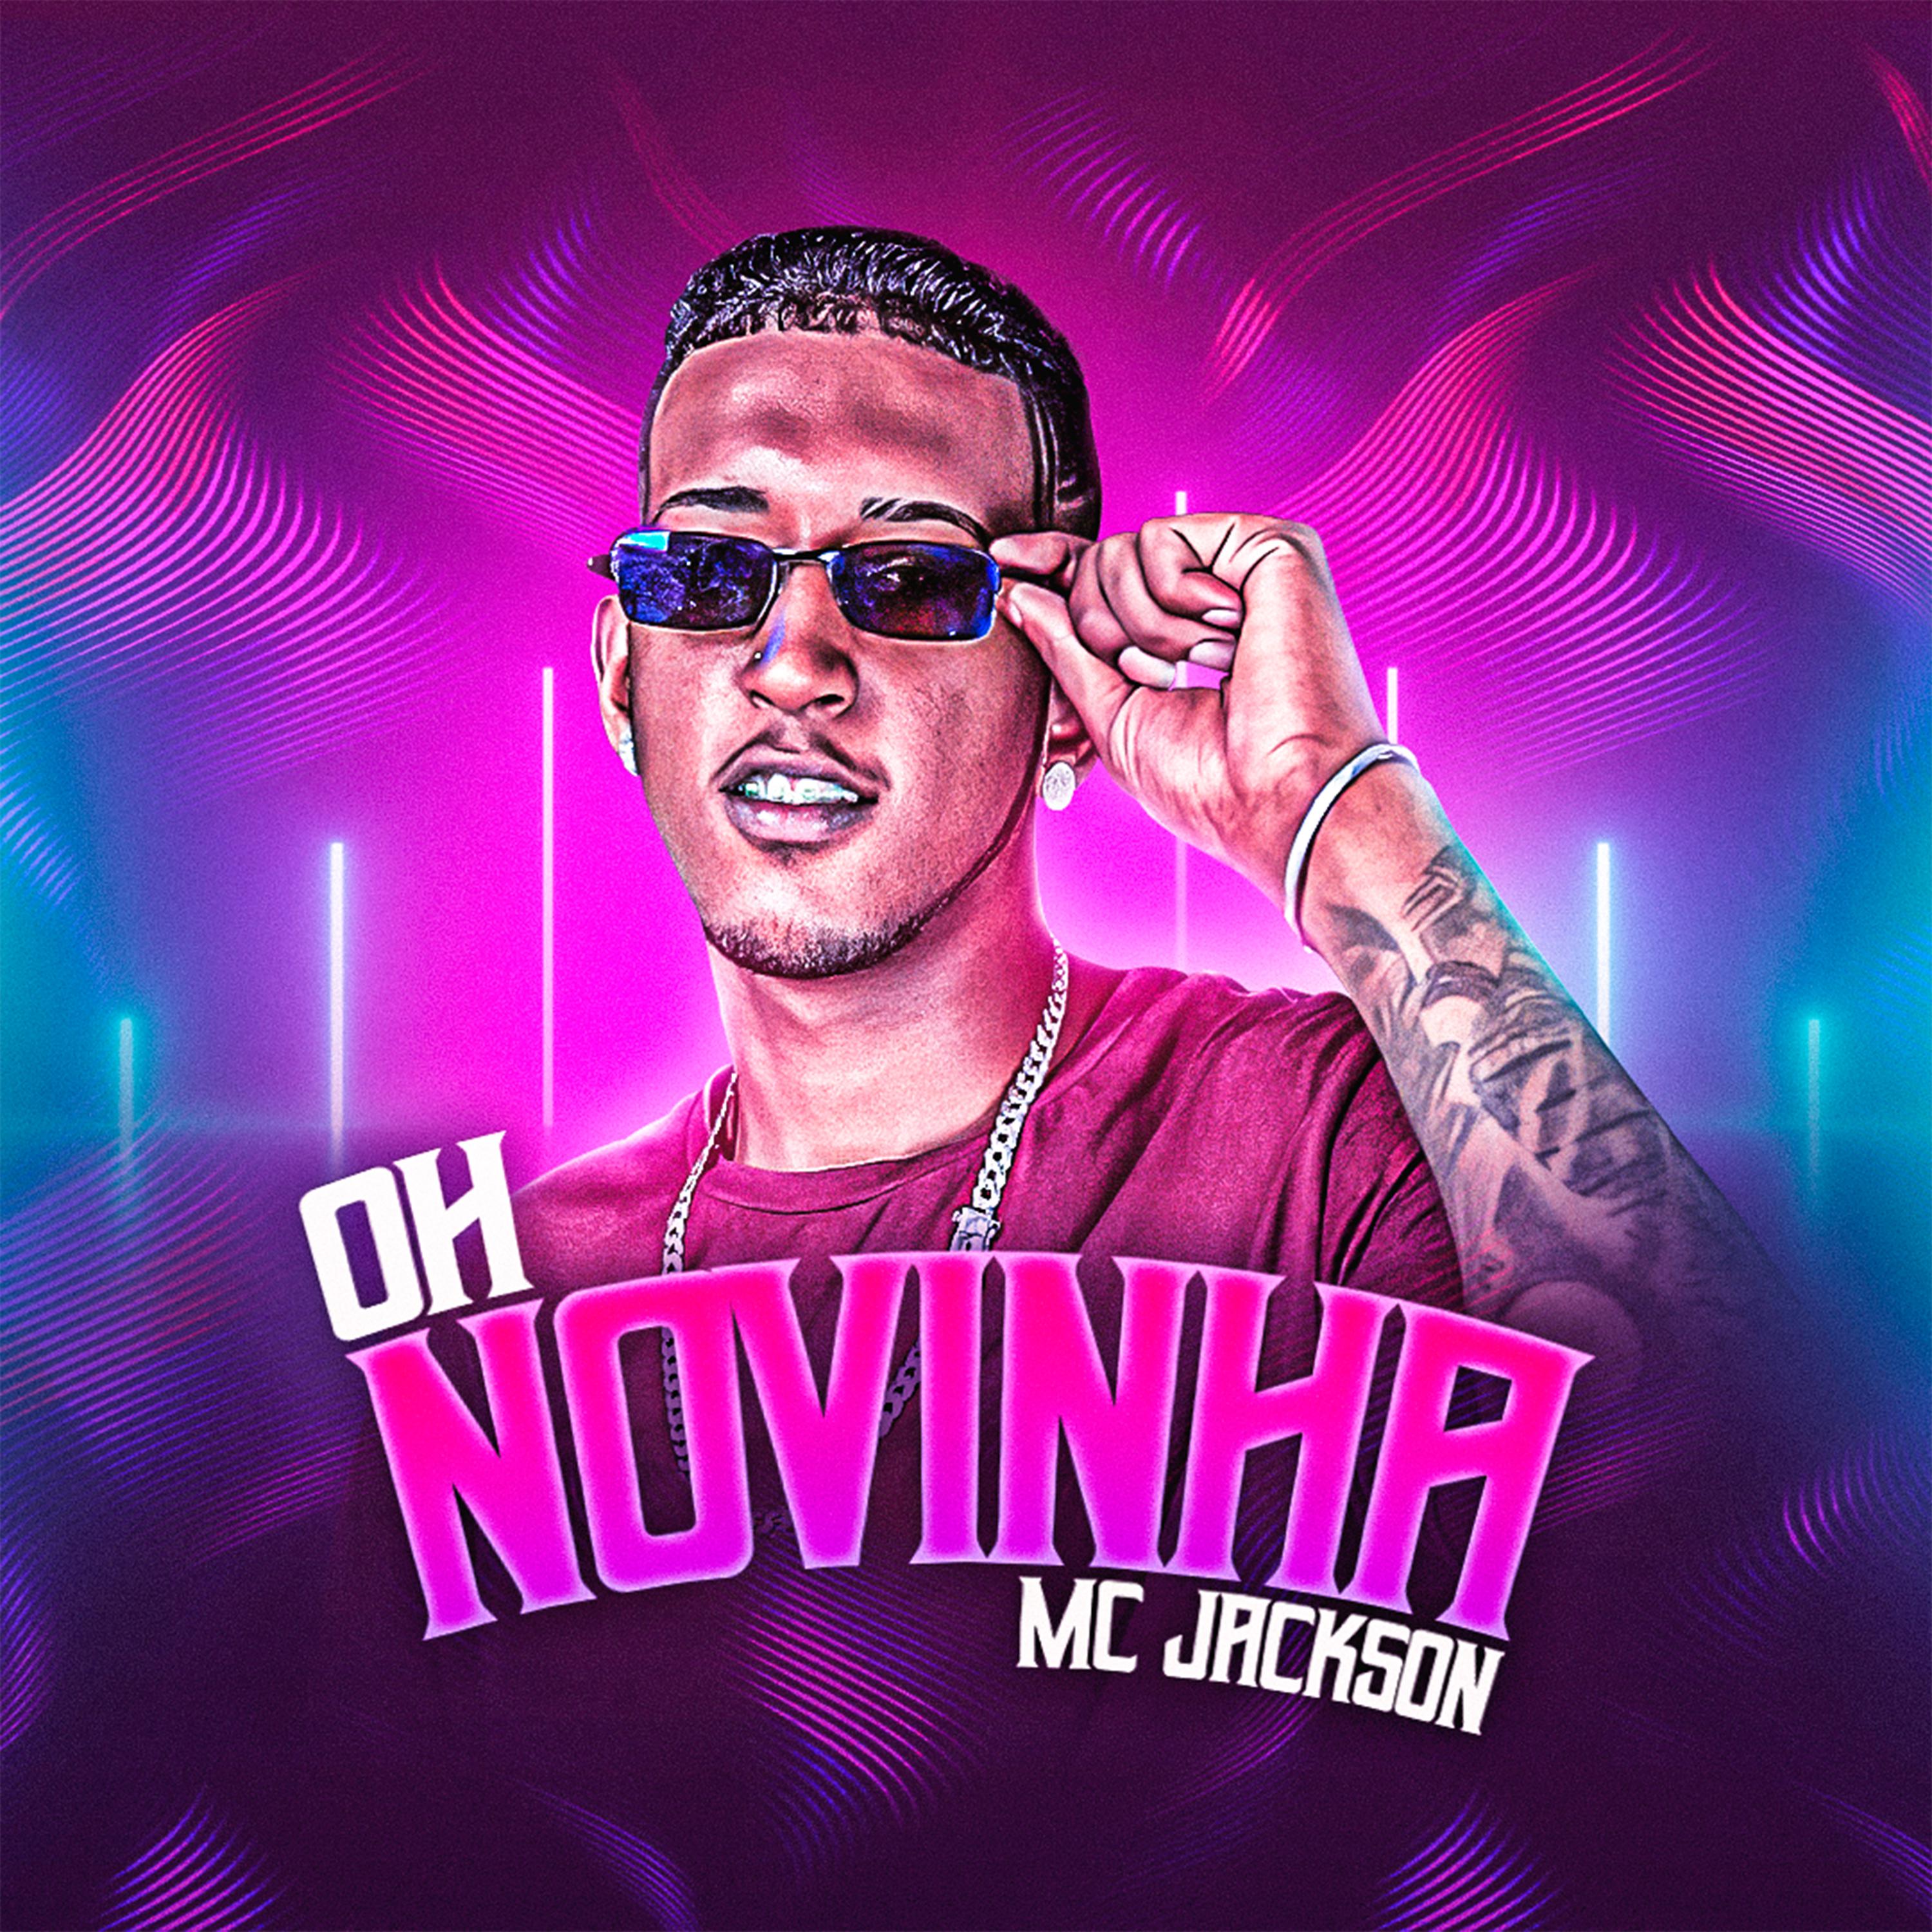 MC Jackson - Oh Novinha (Brega Funk)